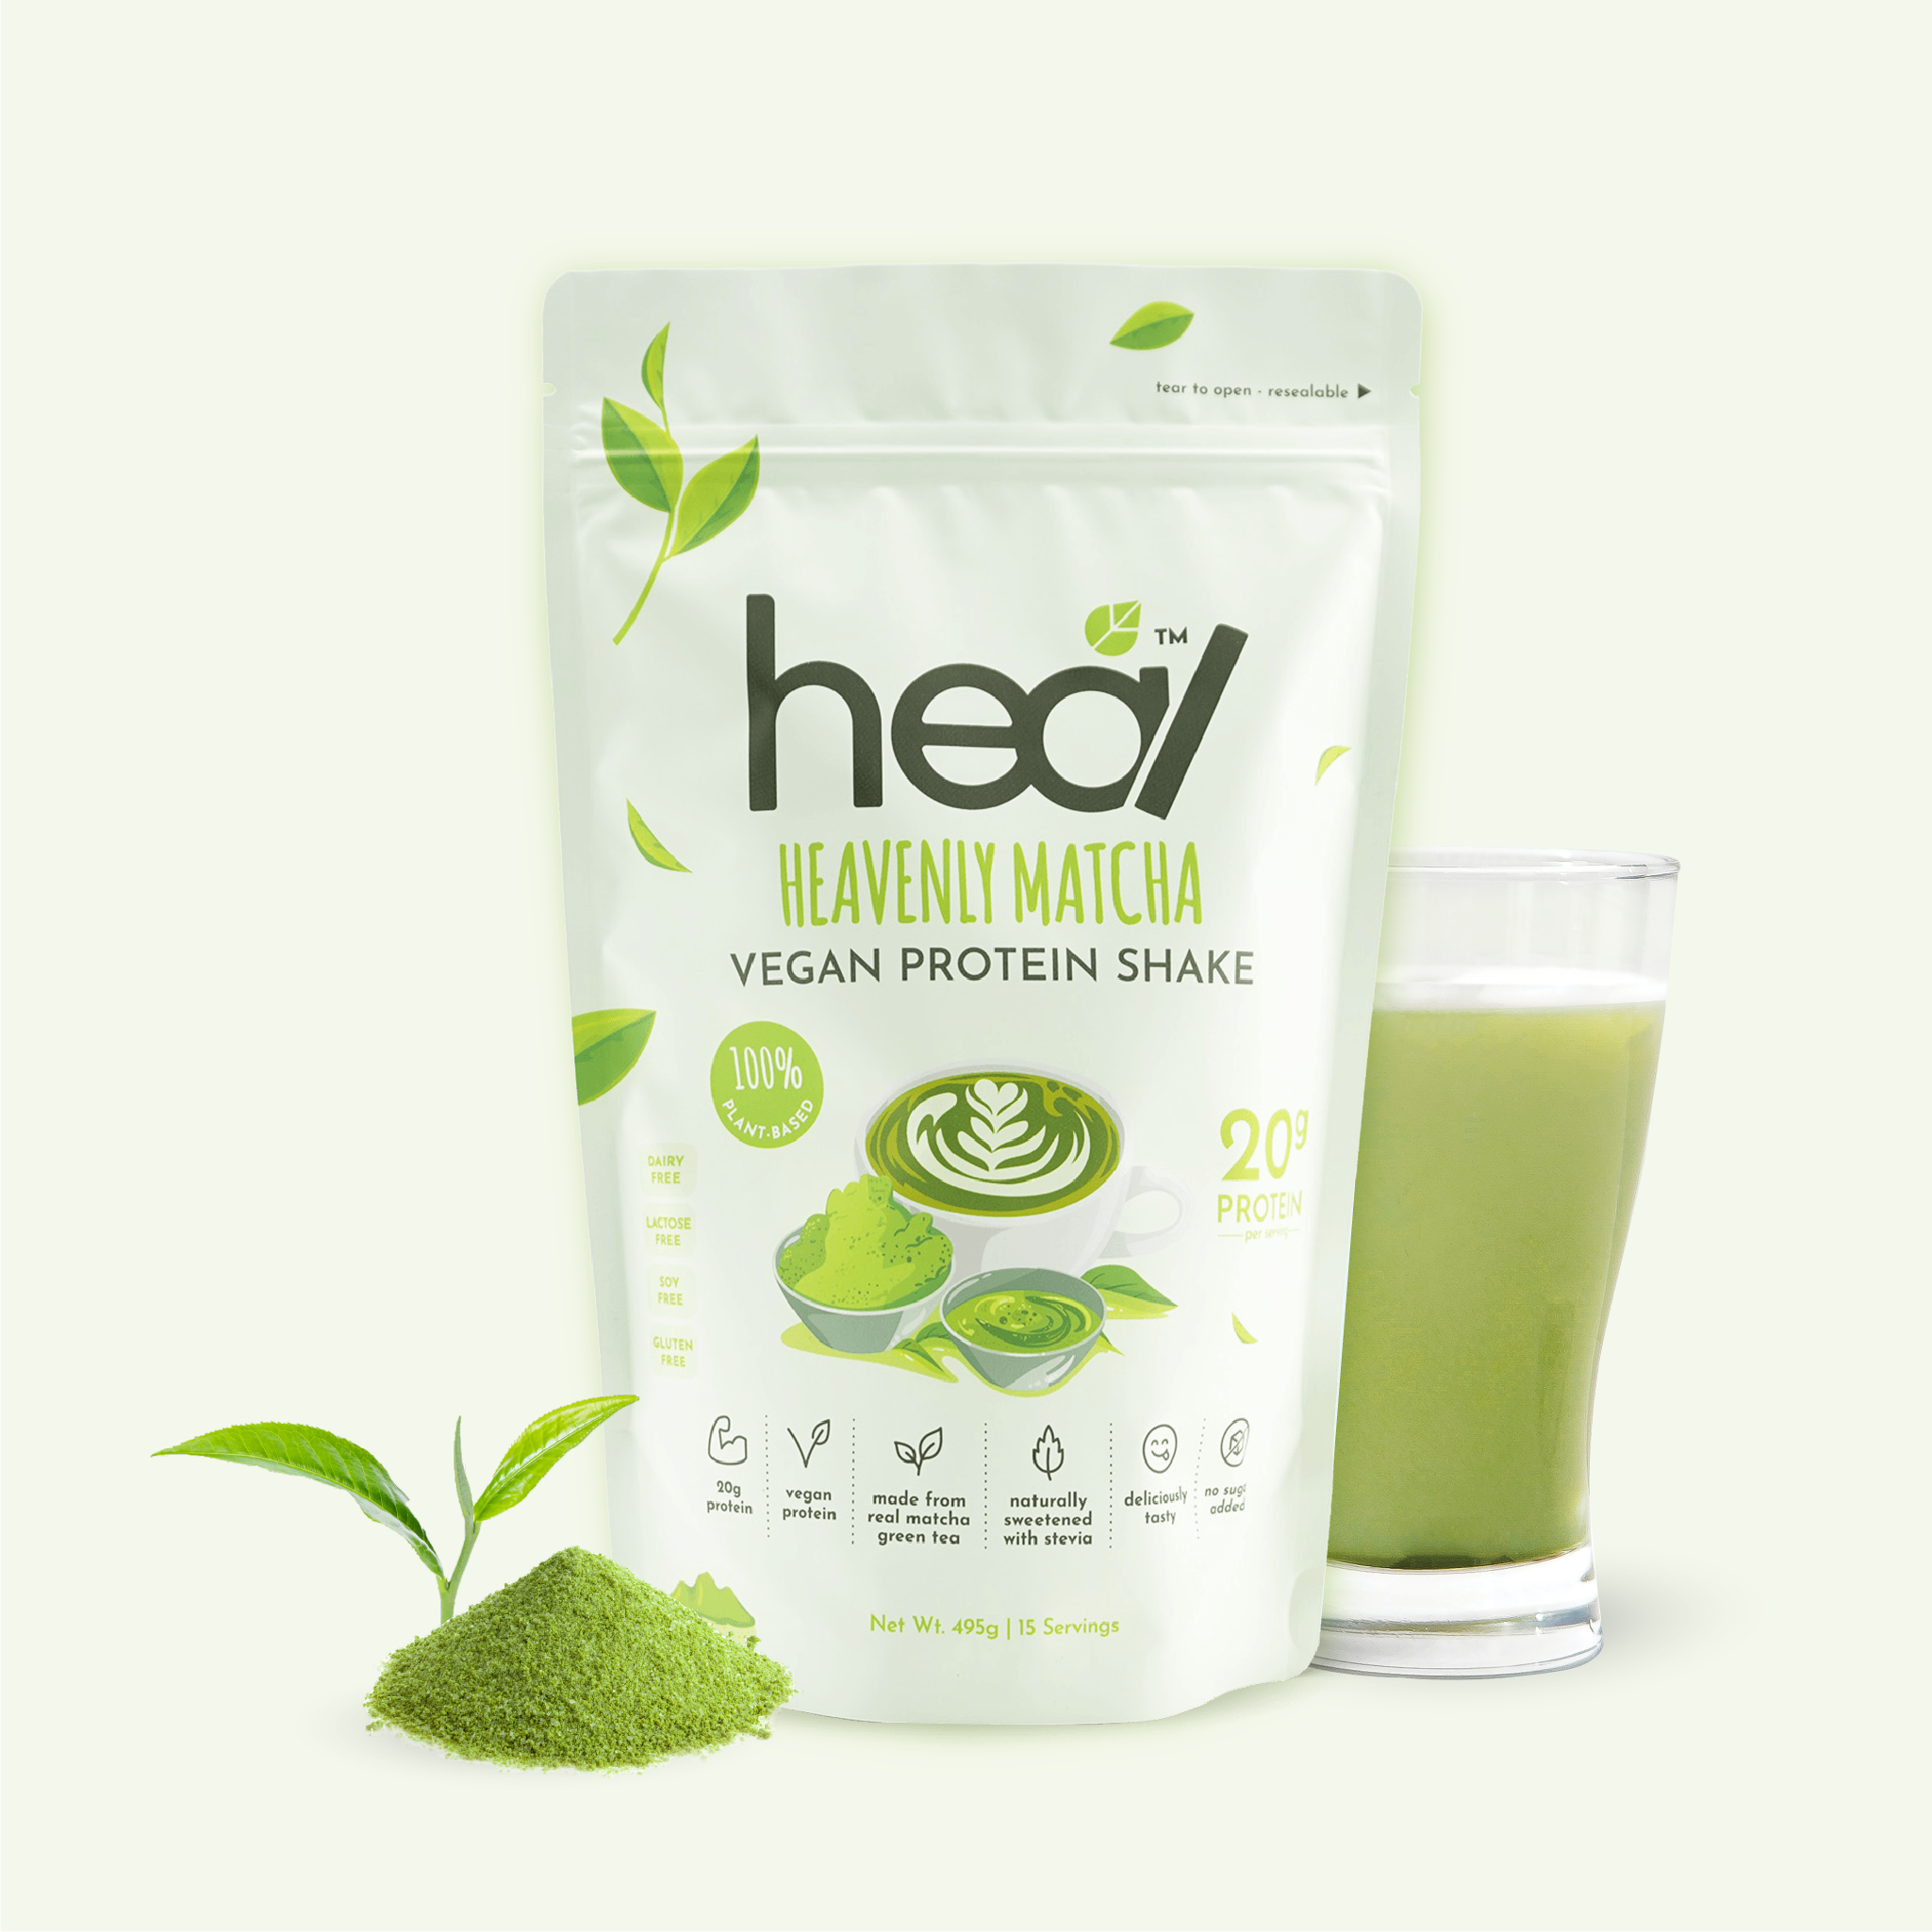 [Subscription Plan] Heal Heavenly Matcha Vegan Protein Shake, 15 Servings Value Pack